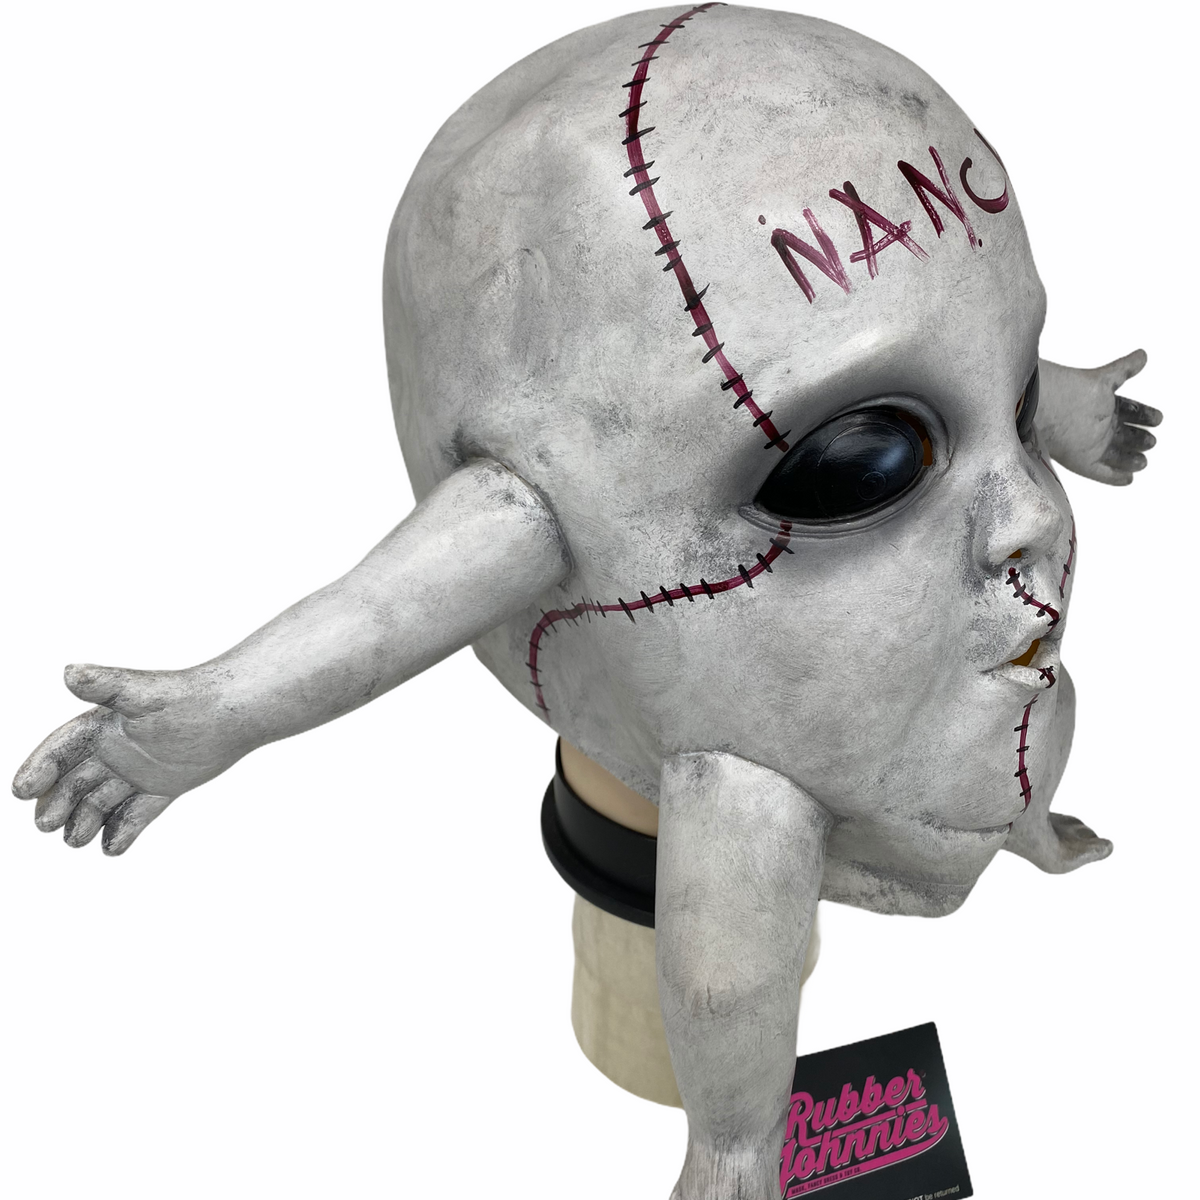 Creepy Baby 'Nancy' Mask